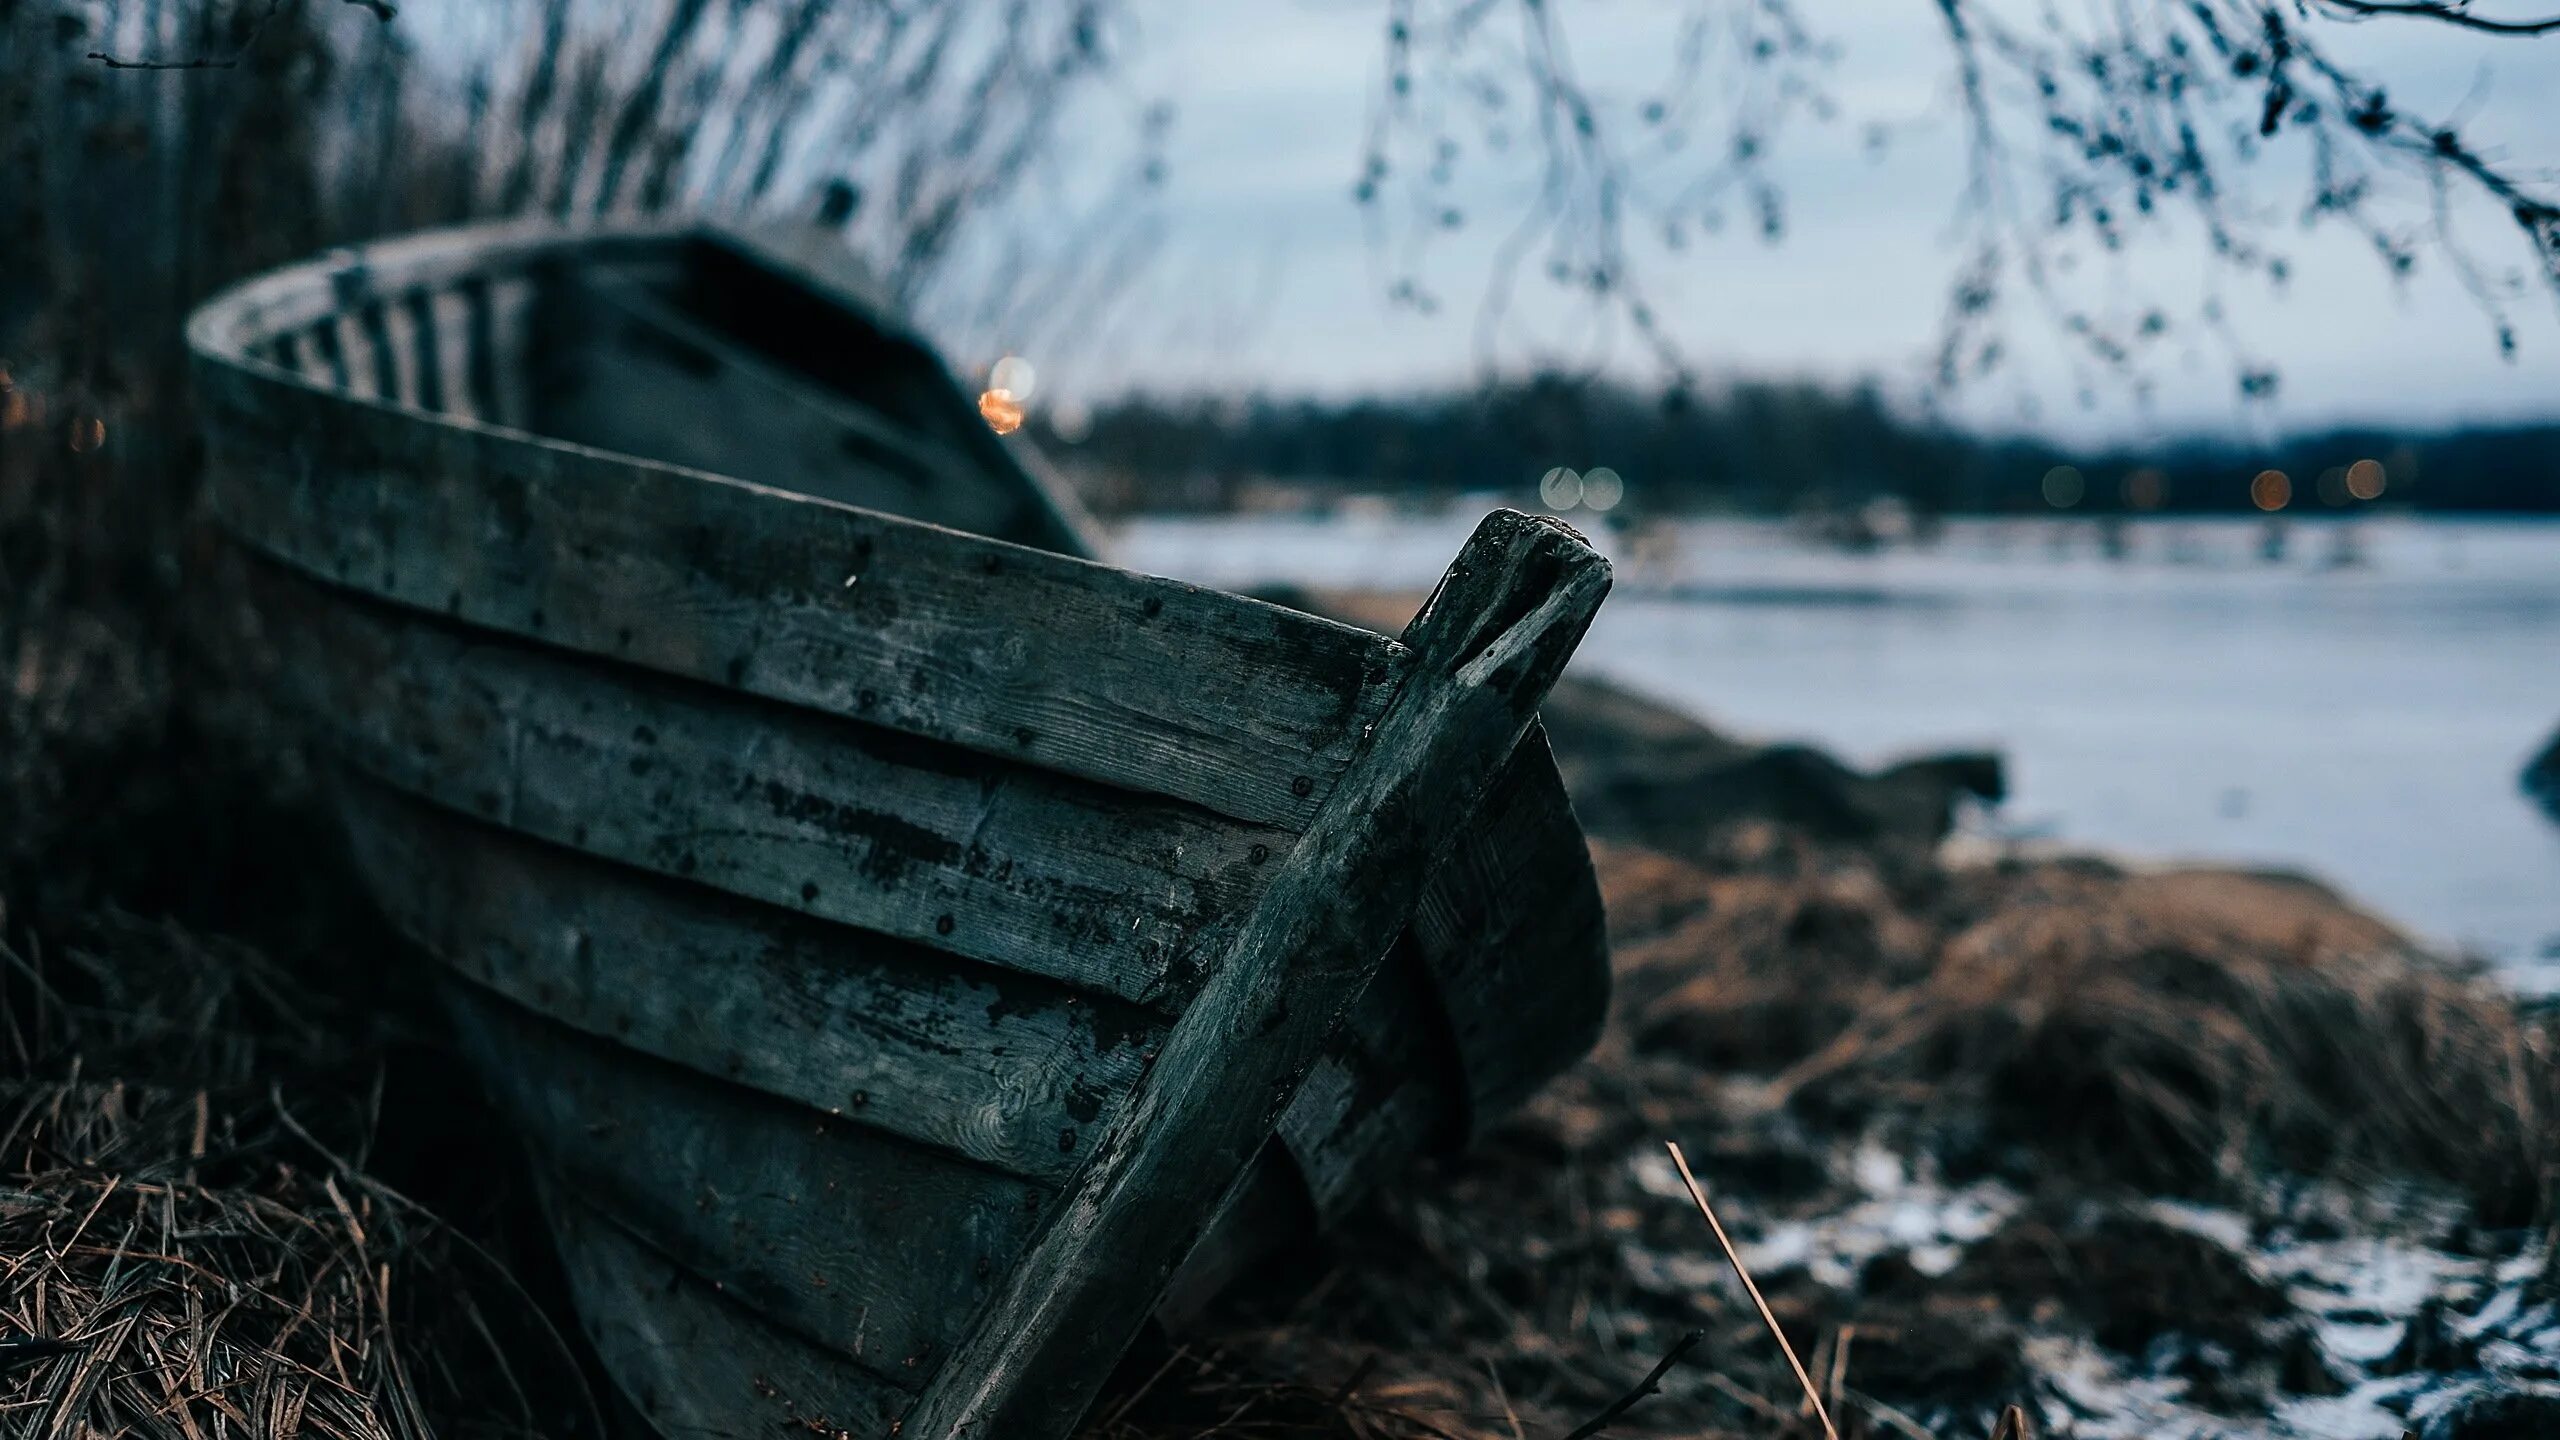 «Лодка в песке» Эдгара Дегай. Старая деревянная лодка. Лодка на реке. Одинокая лодка. Гаврик спал возле лодки